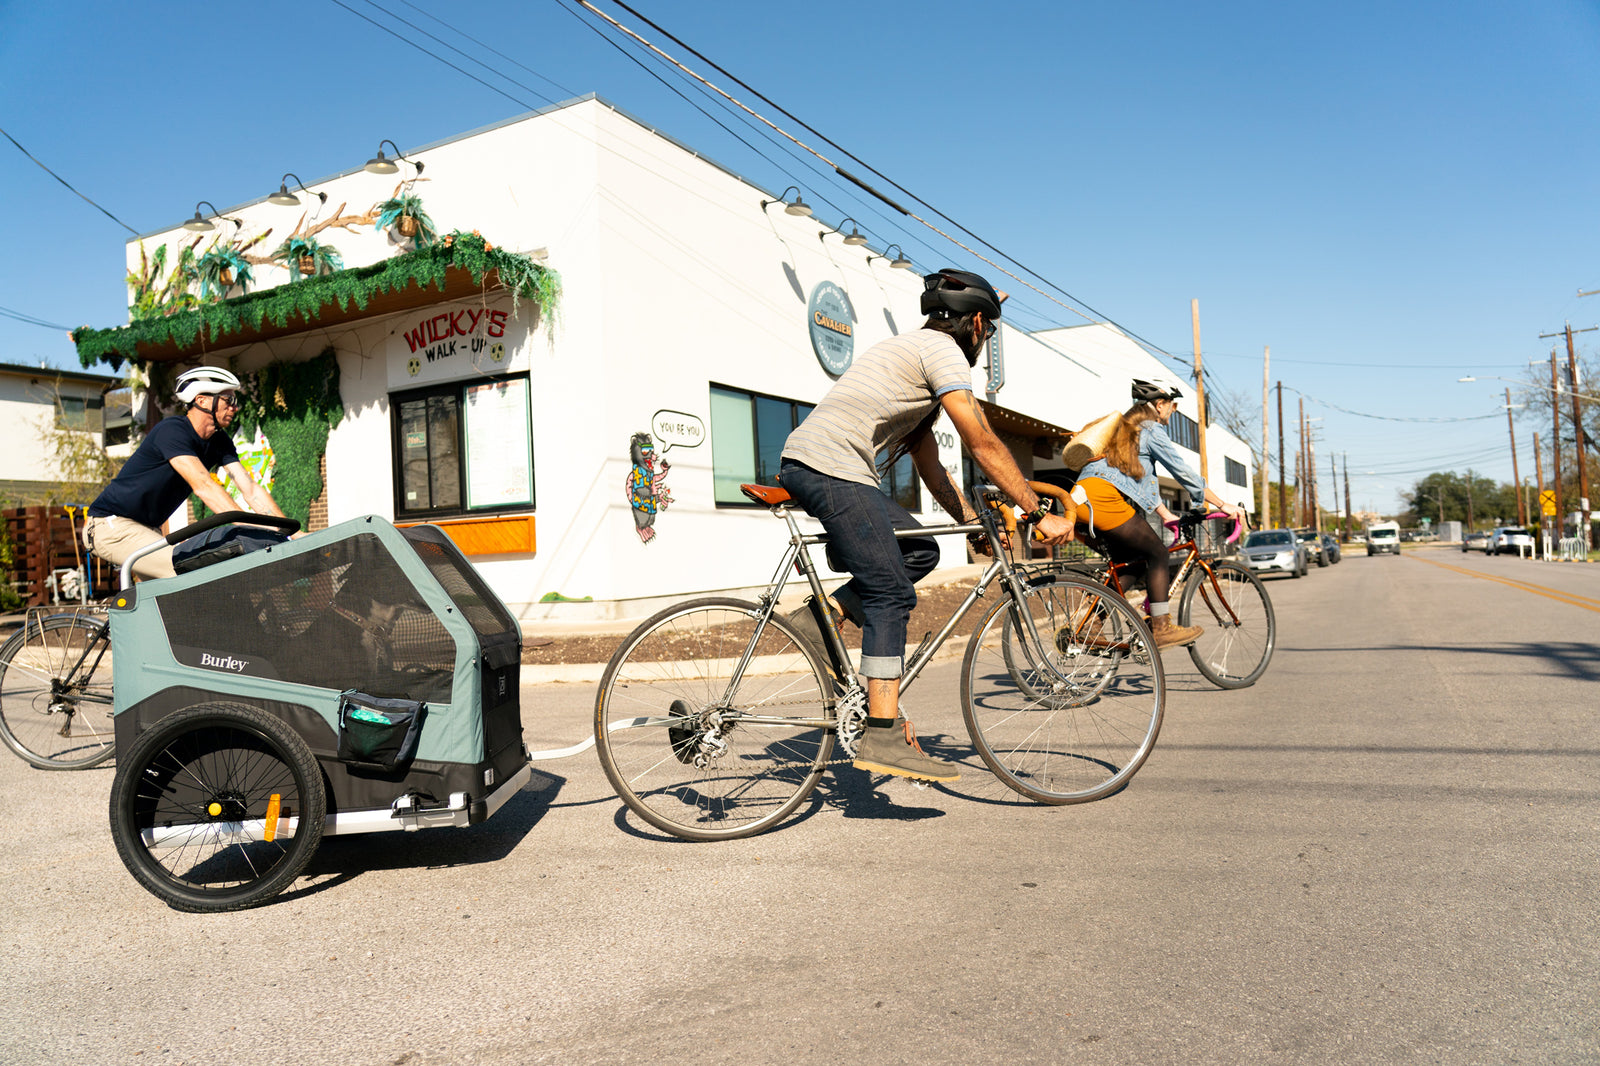 Remolque bicicleta perros Transportín Accesorios bici Mascotas